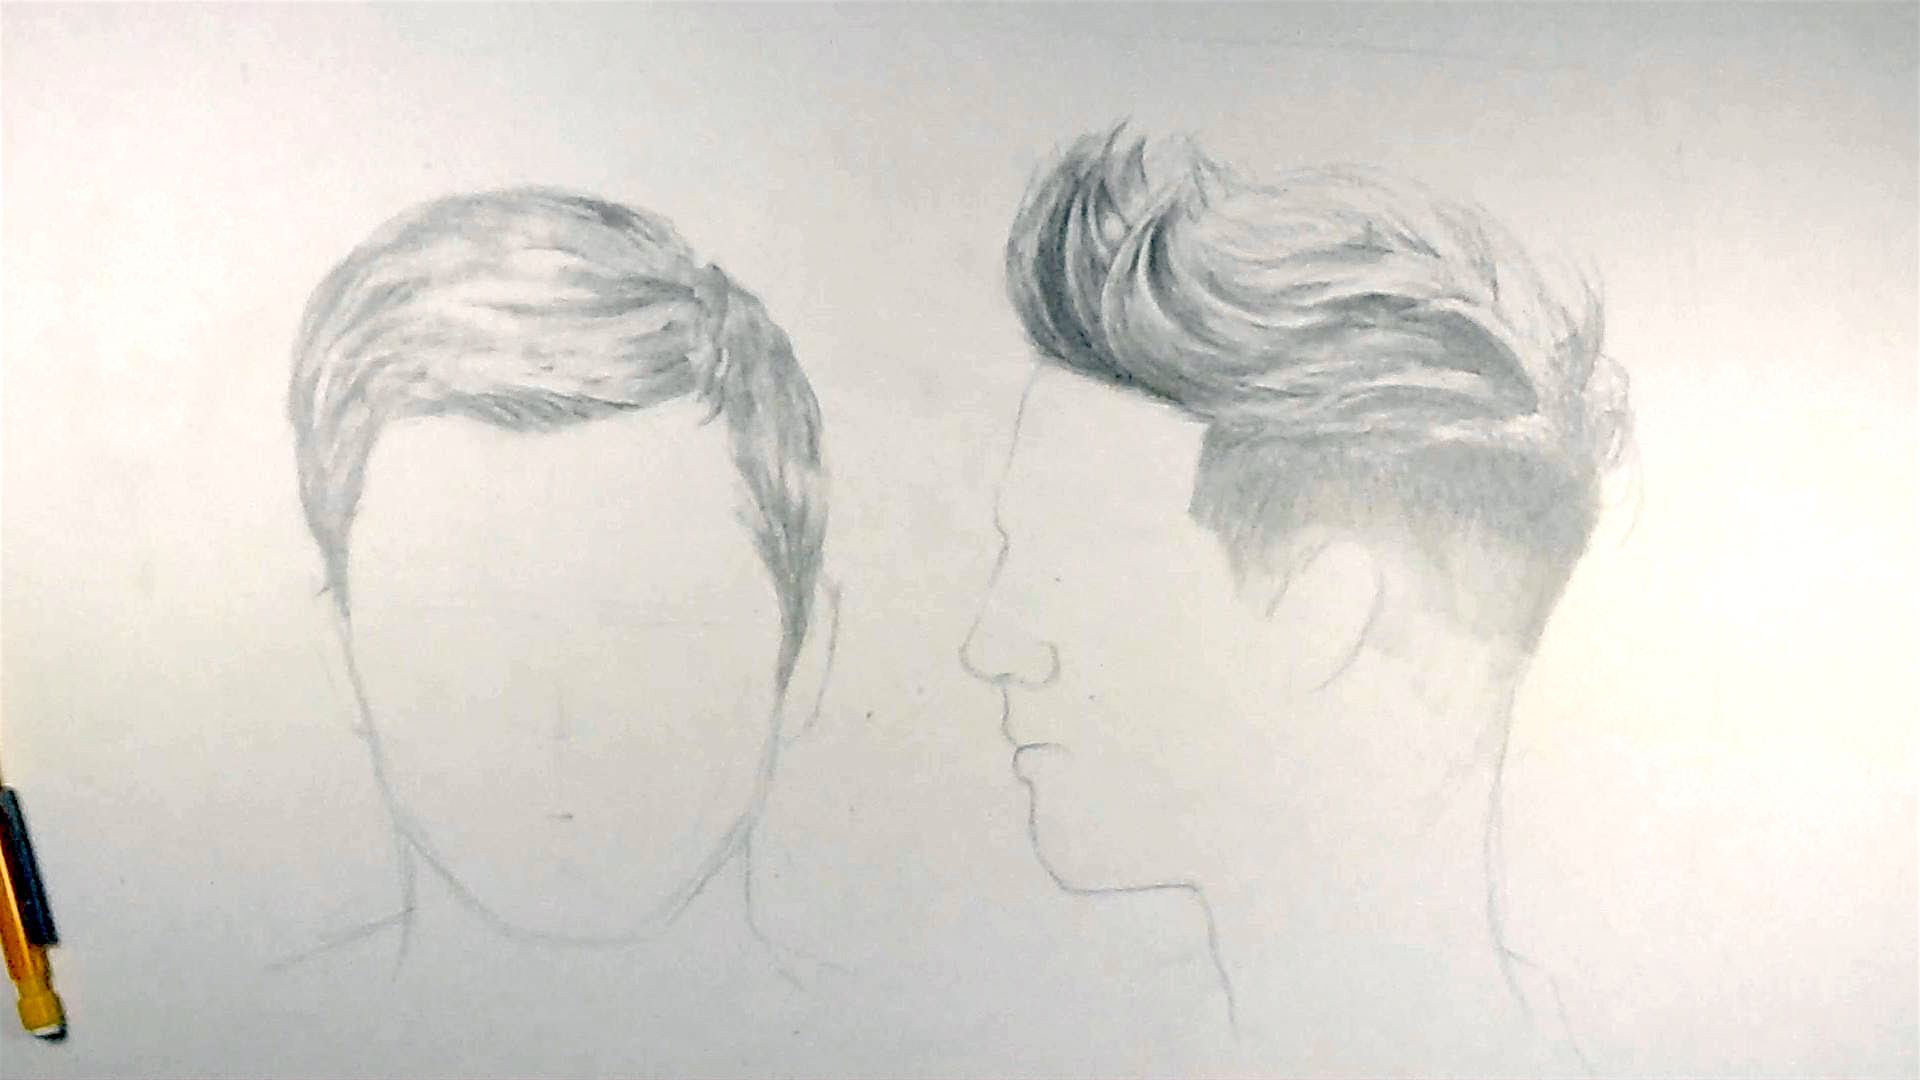 Волосы карандашом мужские